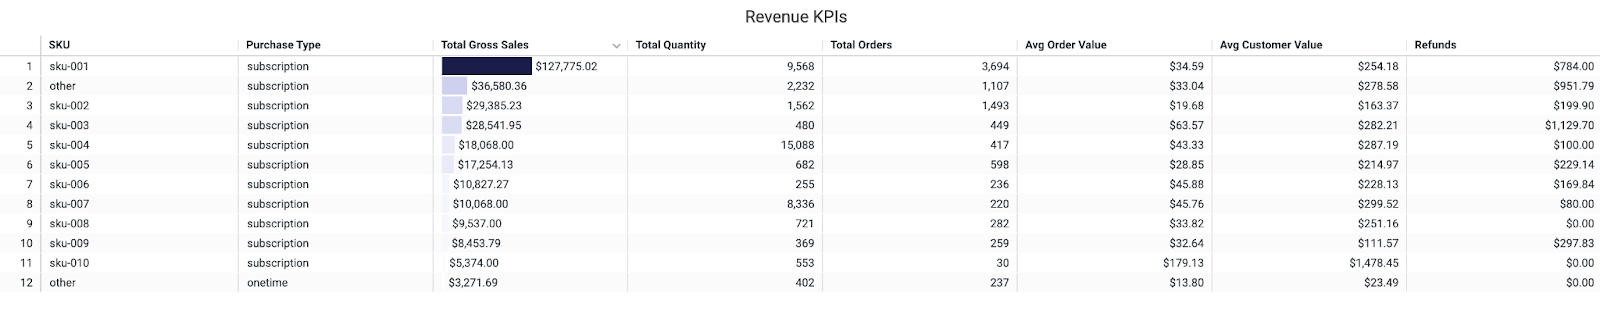 Revenue KPIs chart in the enhanced analytics suite.